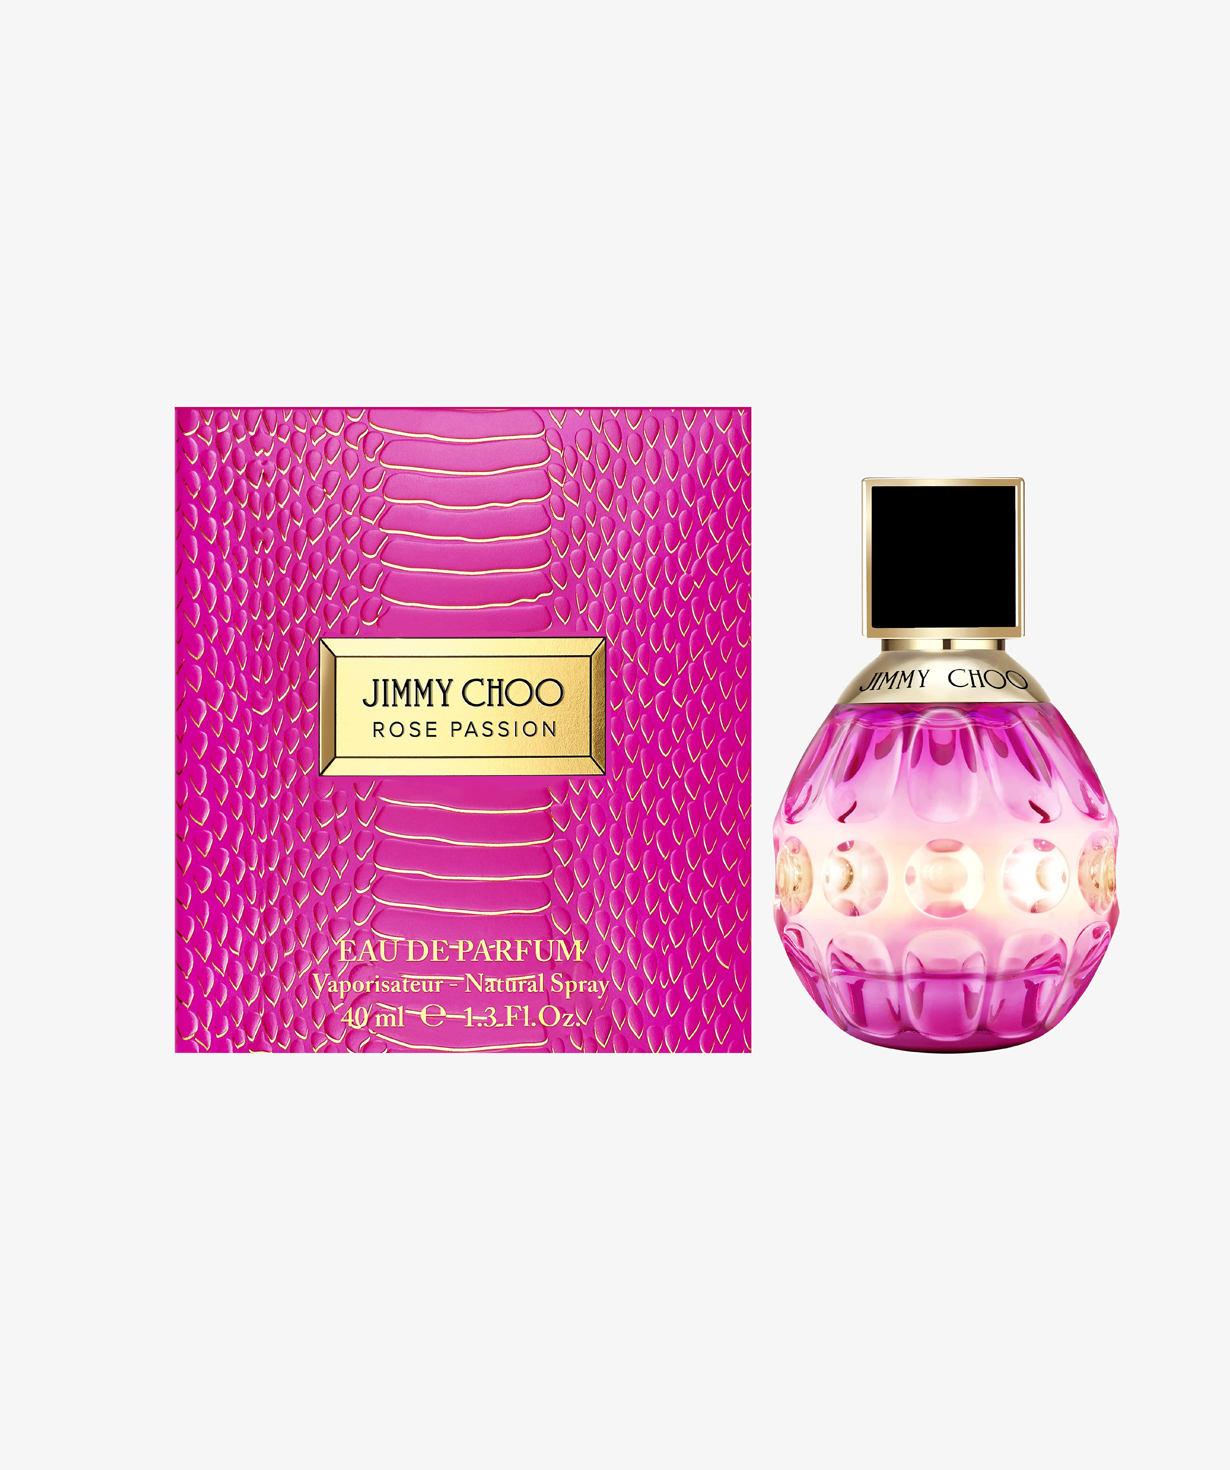 Perfume «Jimmy Choo» Rose Passion, for women, 40 ml